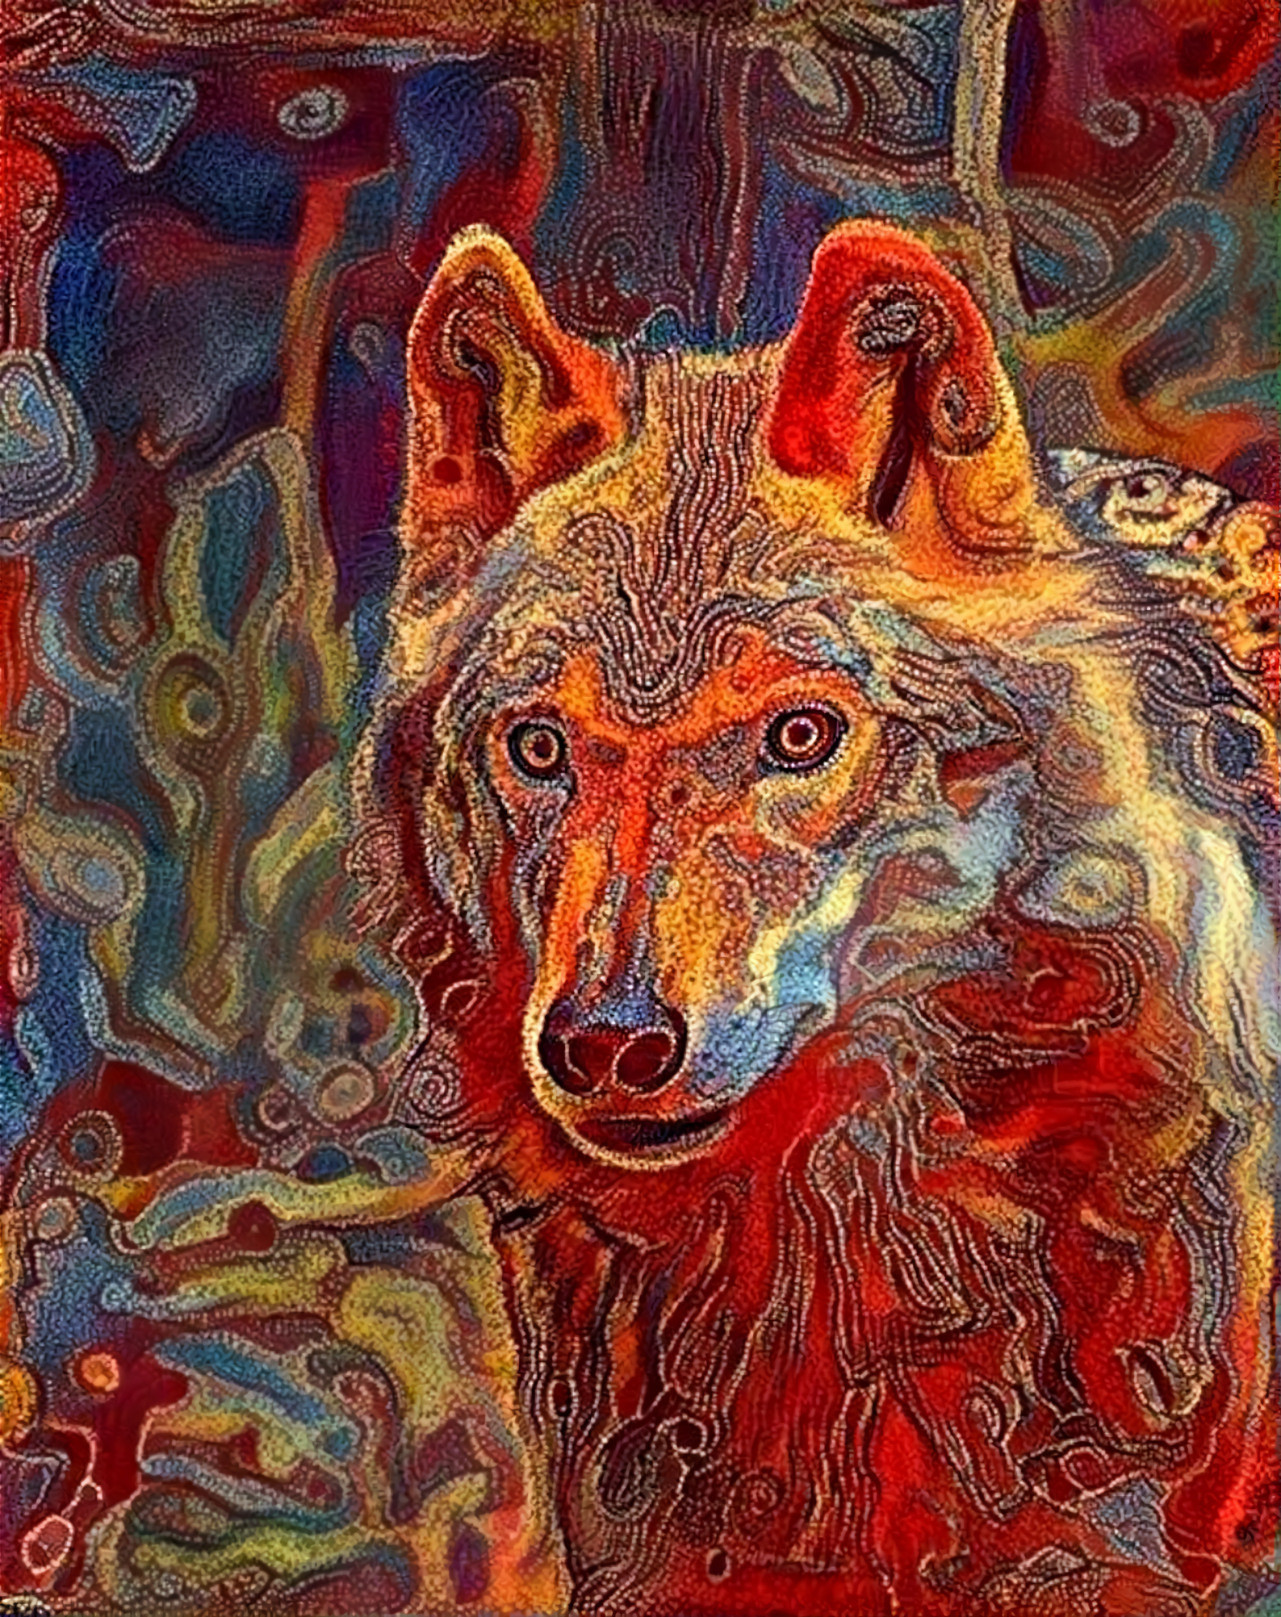 Big red wolf